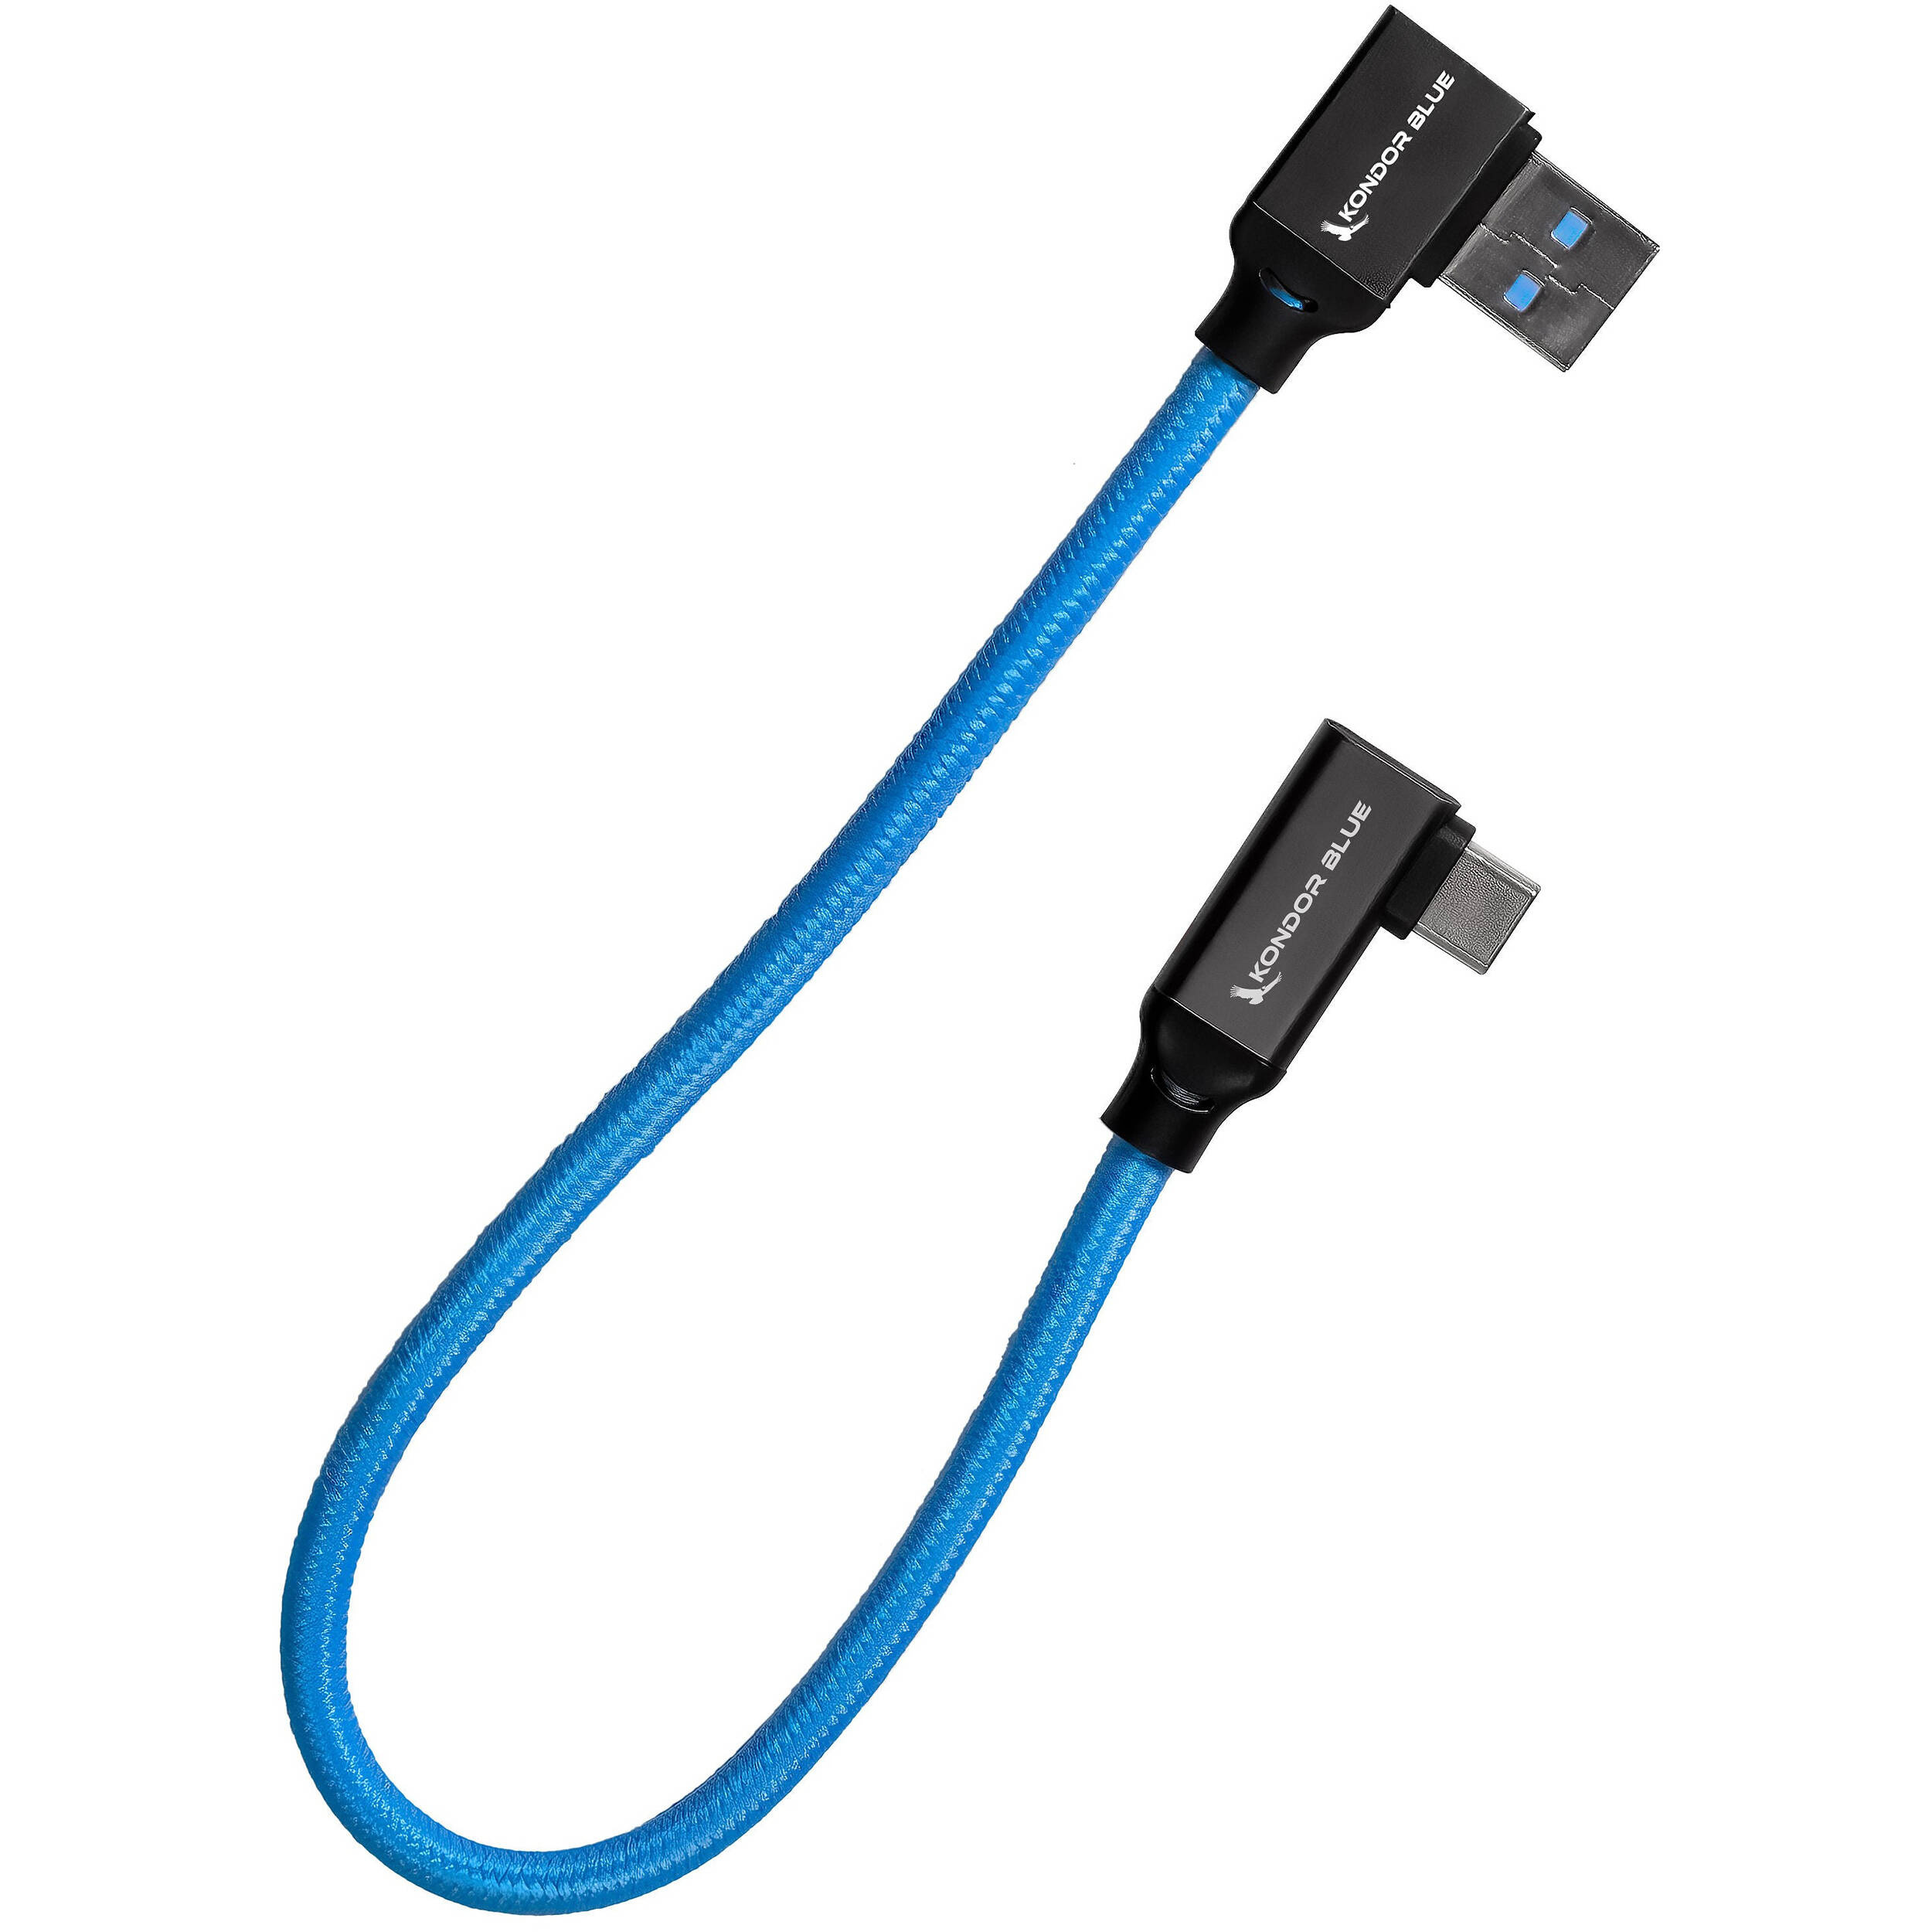 Kondor Blue 30cm USB-C to USB-A Right Angle Cable (Blue)